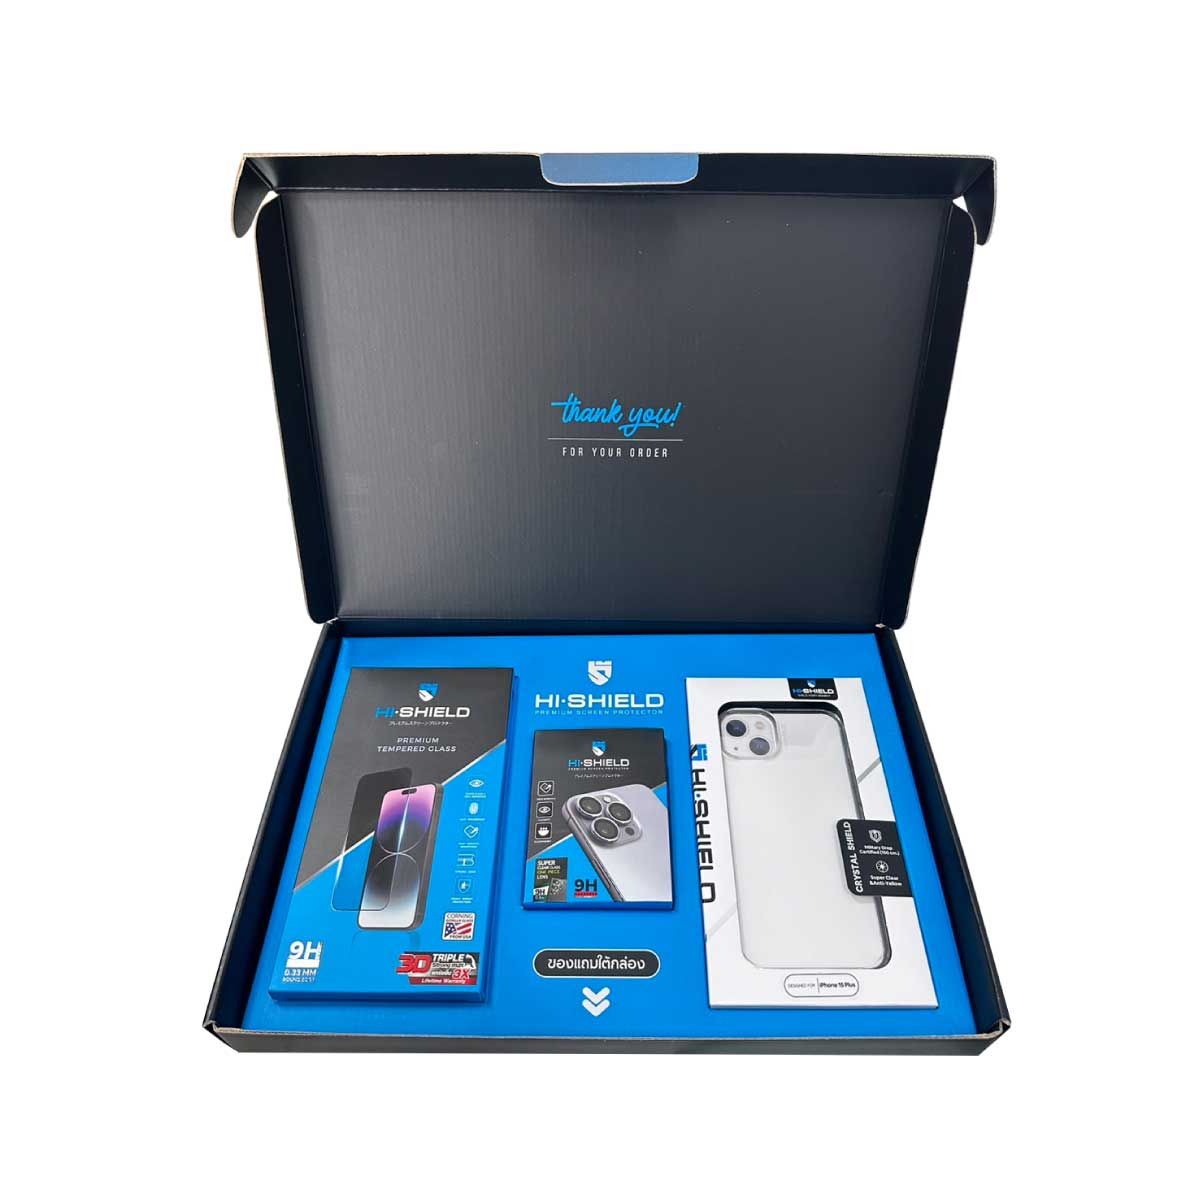 HI-SHIELD Boxset1 iPhone15 Plus ( 3DTS + LENS1 + Crystal case + กระเป๋า)